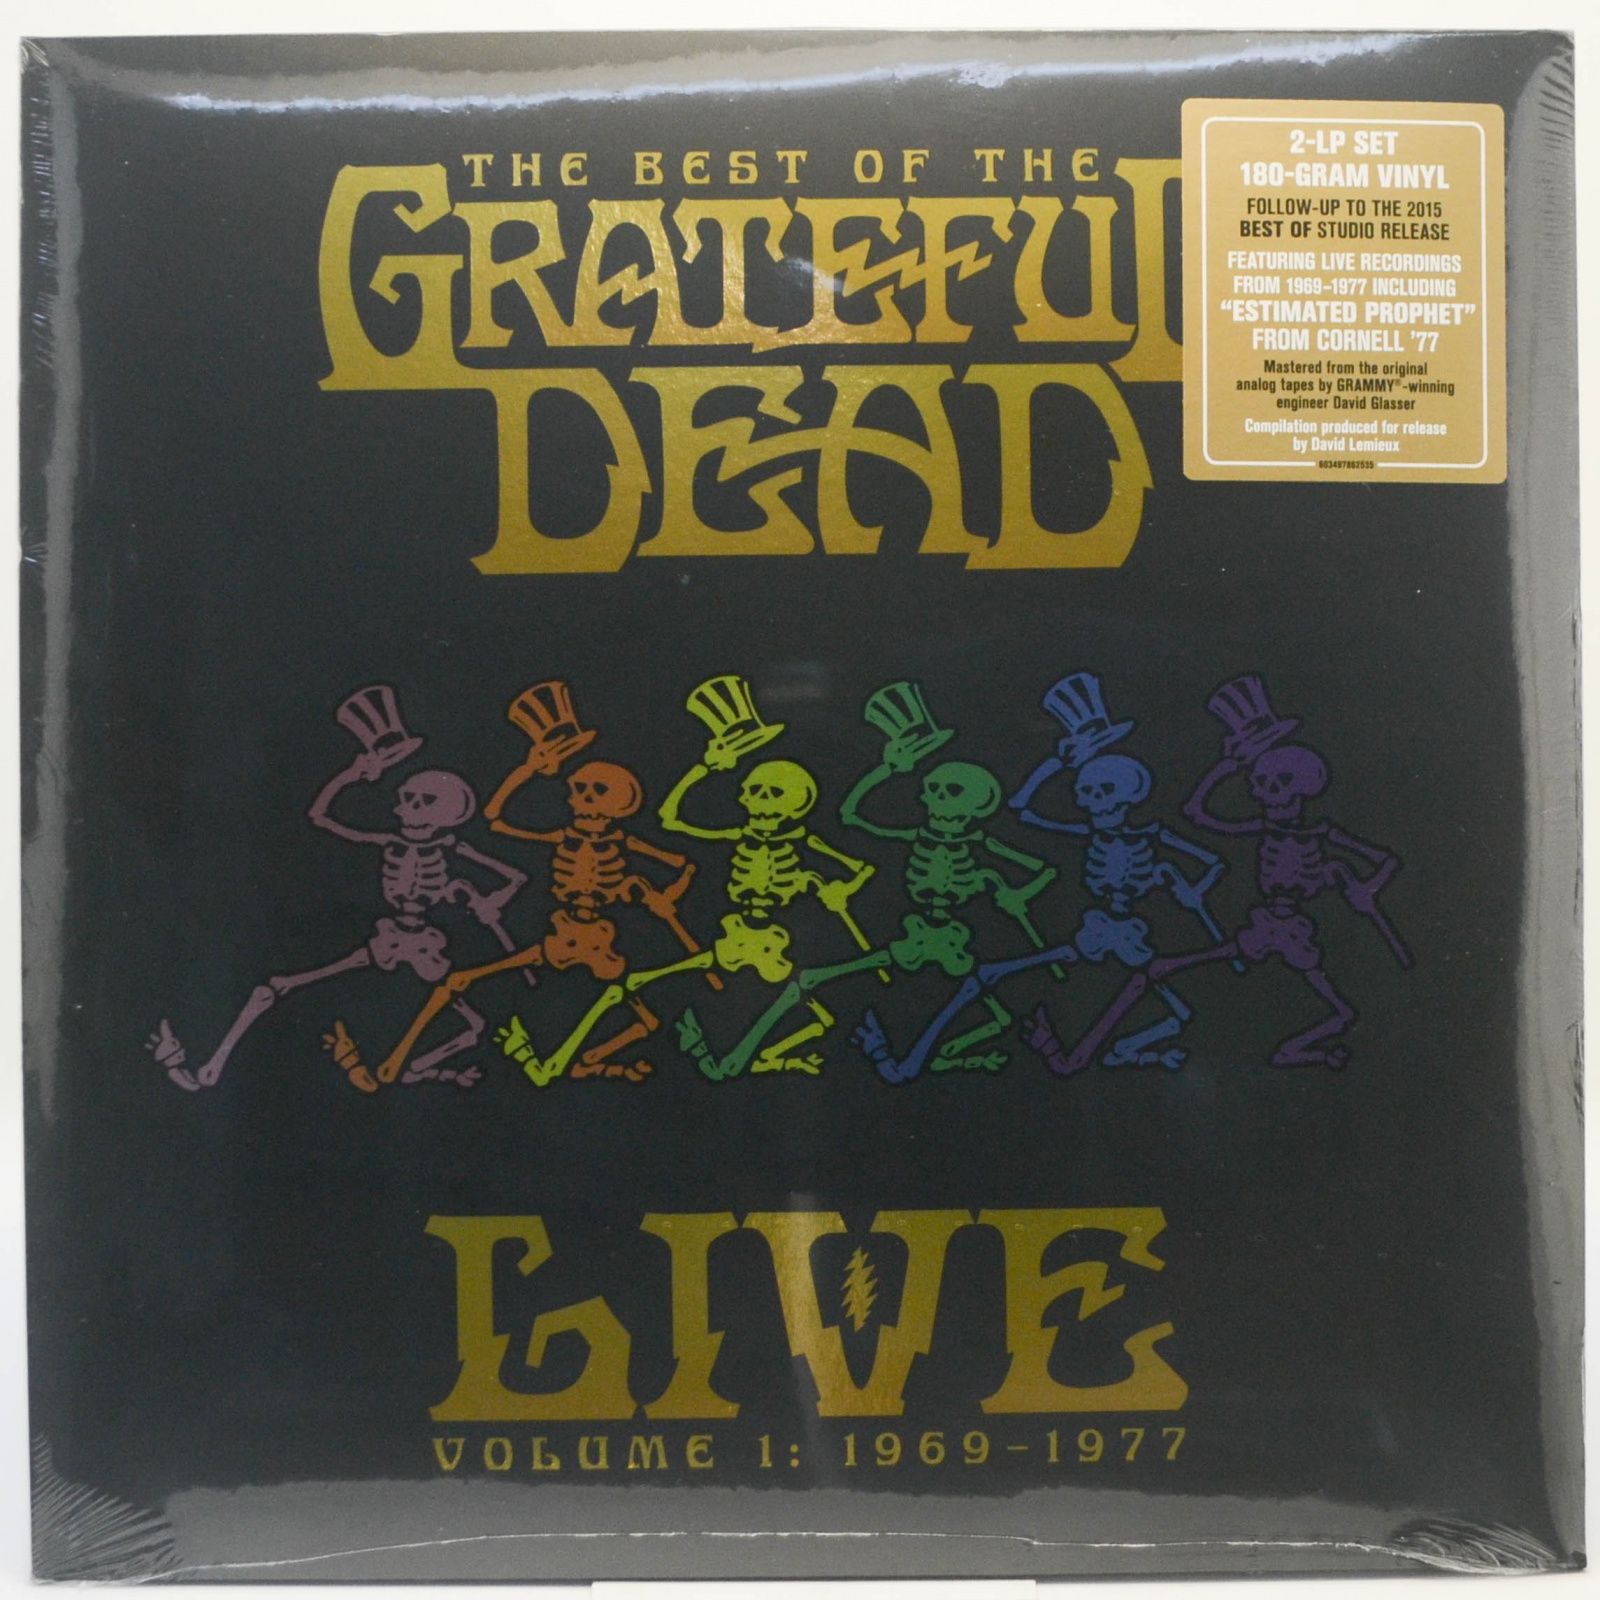 Best of the Grateful Dead Live: Volume 1 (2LP, US), 2018